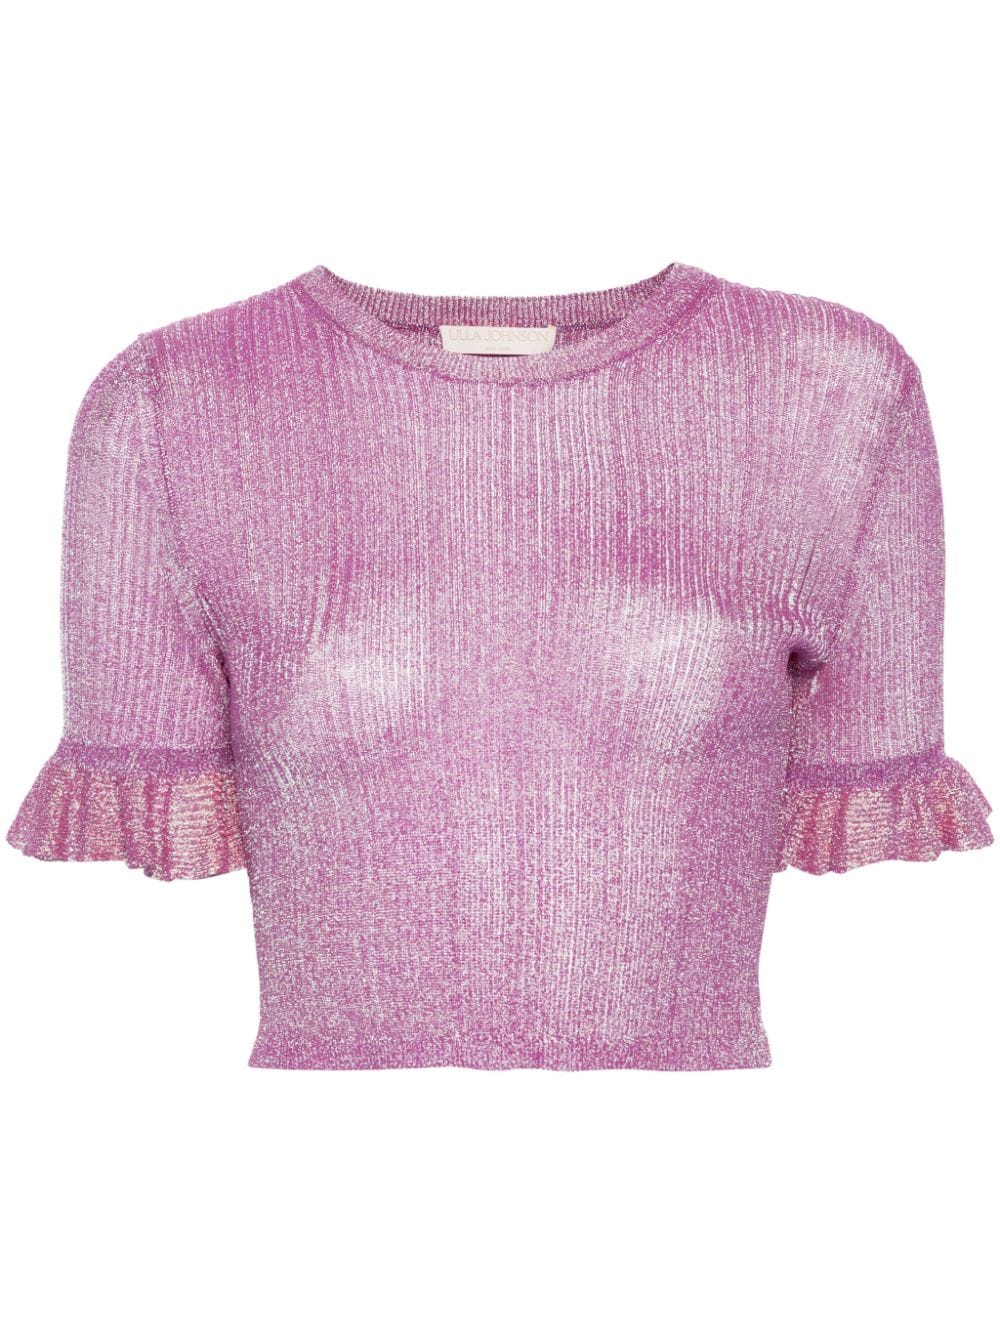 Ulla Johnson Patti knitted top - Pink von Ulla Johnson